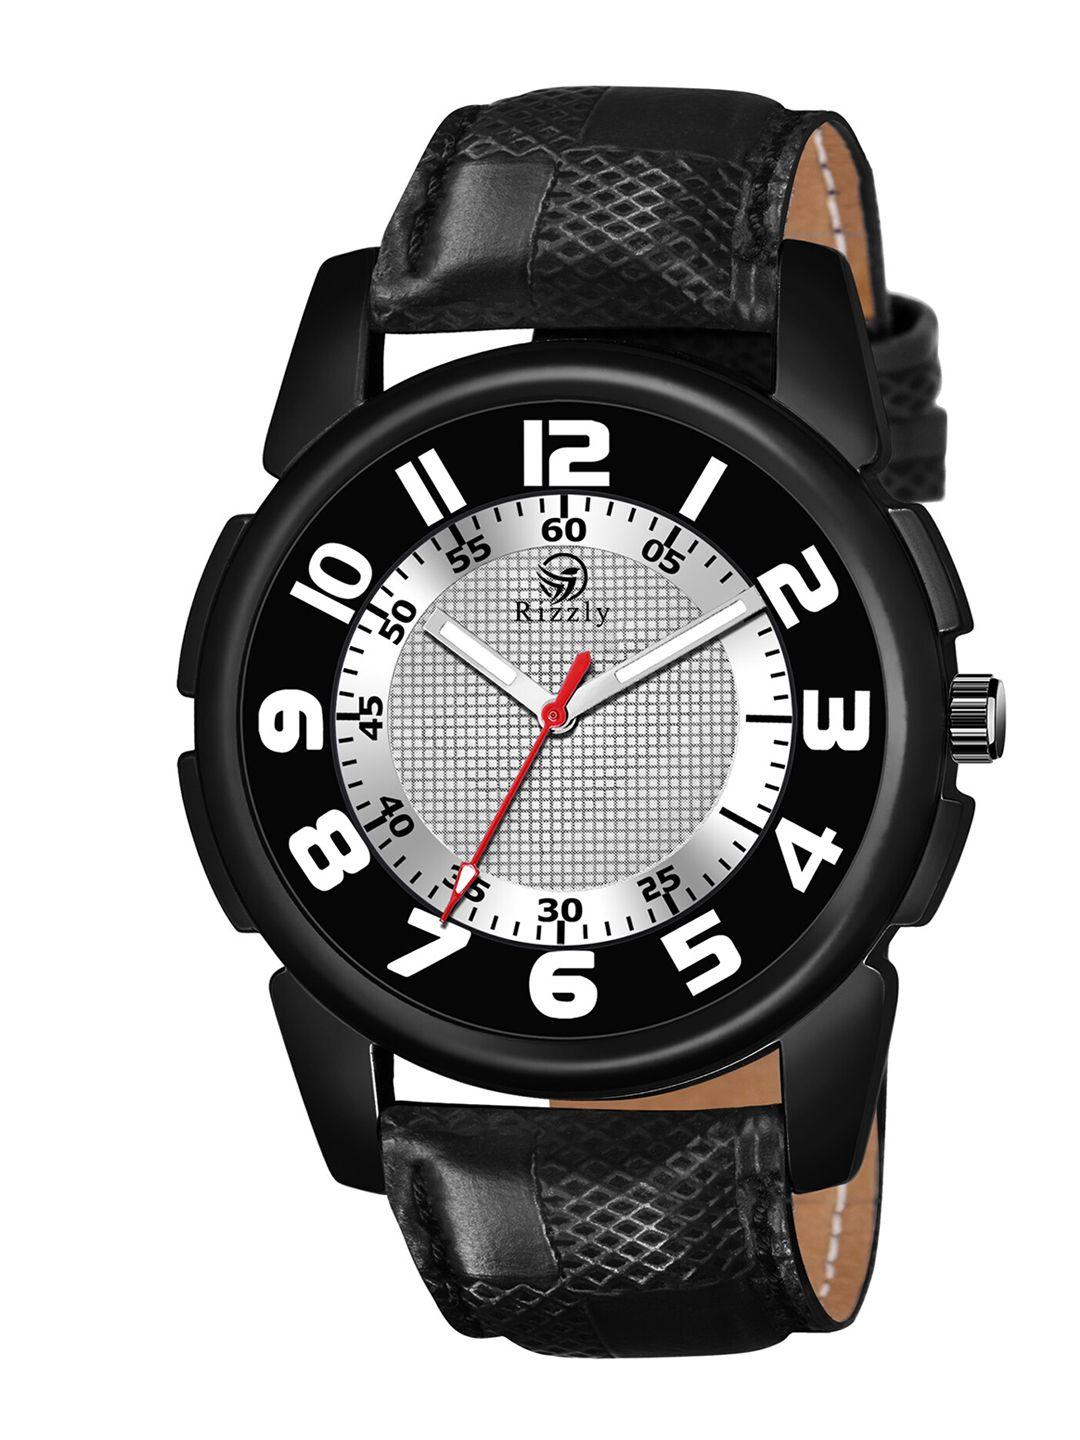 rizzly-boys-black-brass-printed-dial-&-black-leather-straps-analogue-watch-rz-213-black